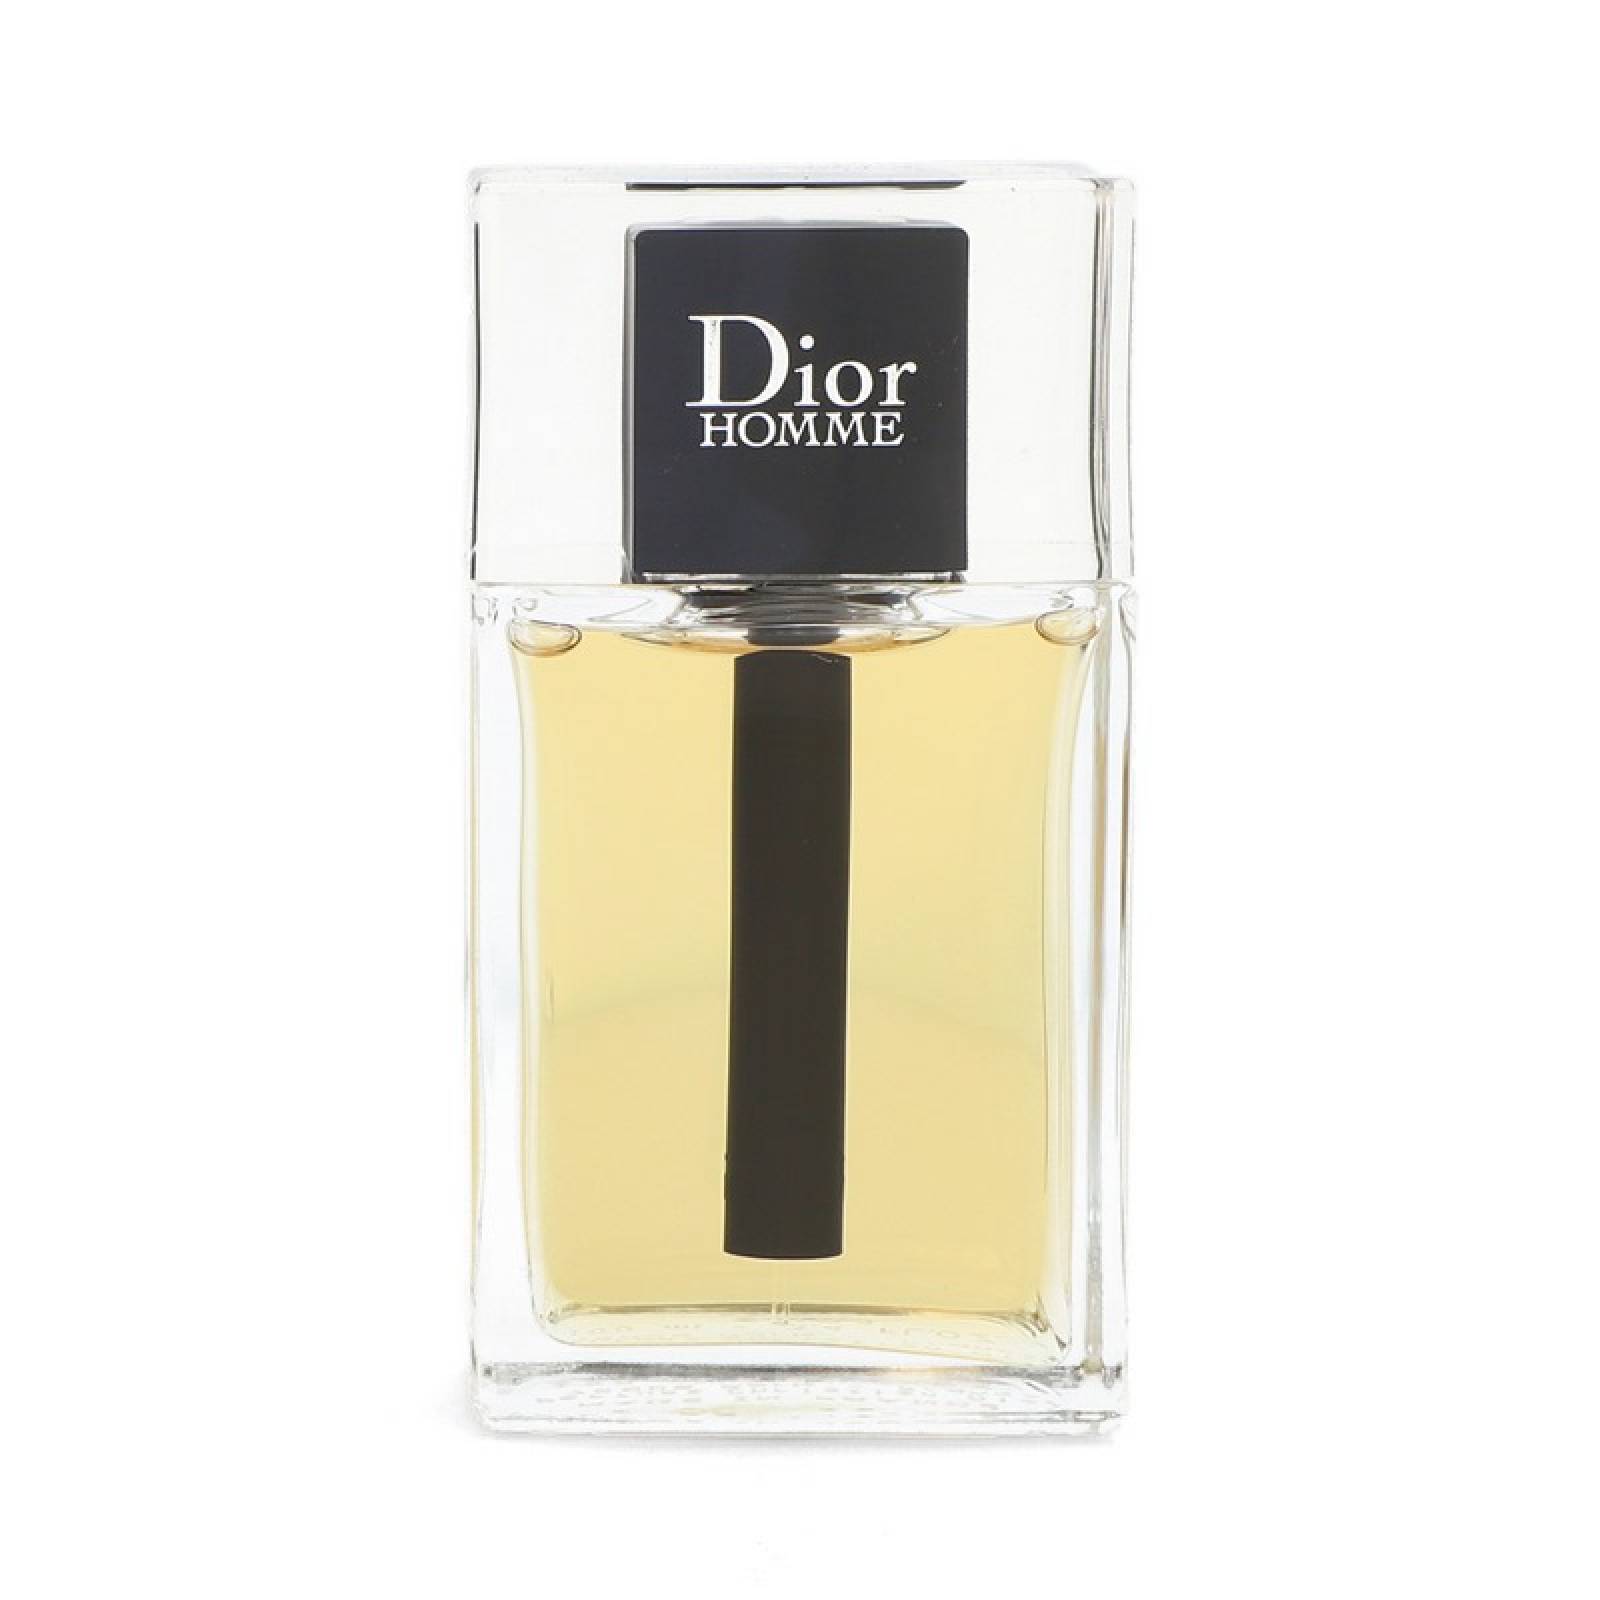 Perfume para Caballero Dior Homme 100 ml Edt de Christian Dior